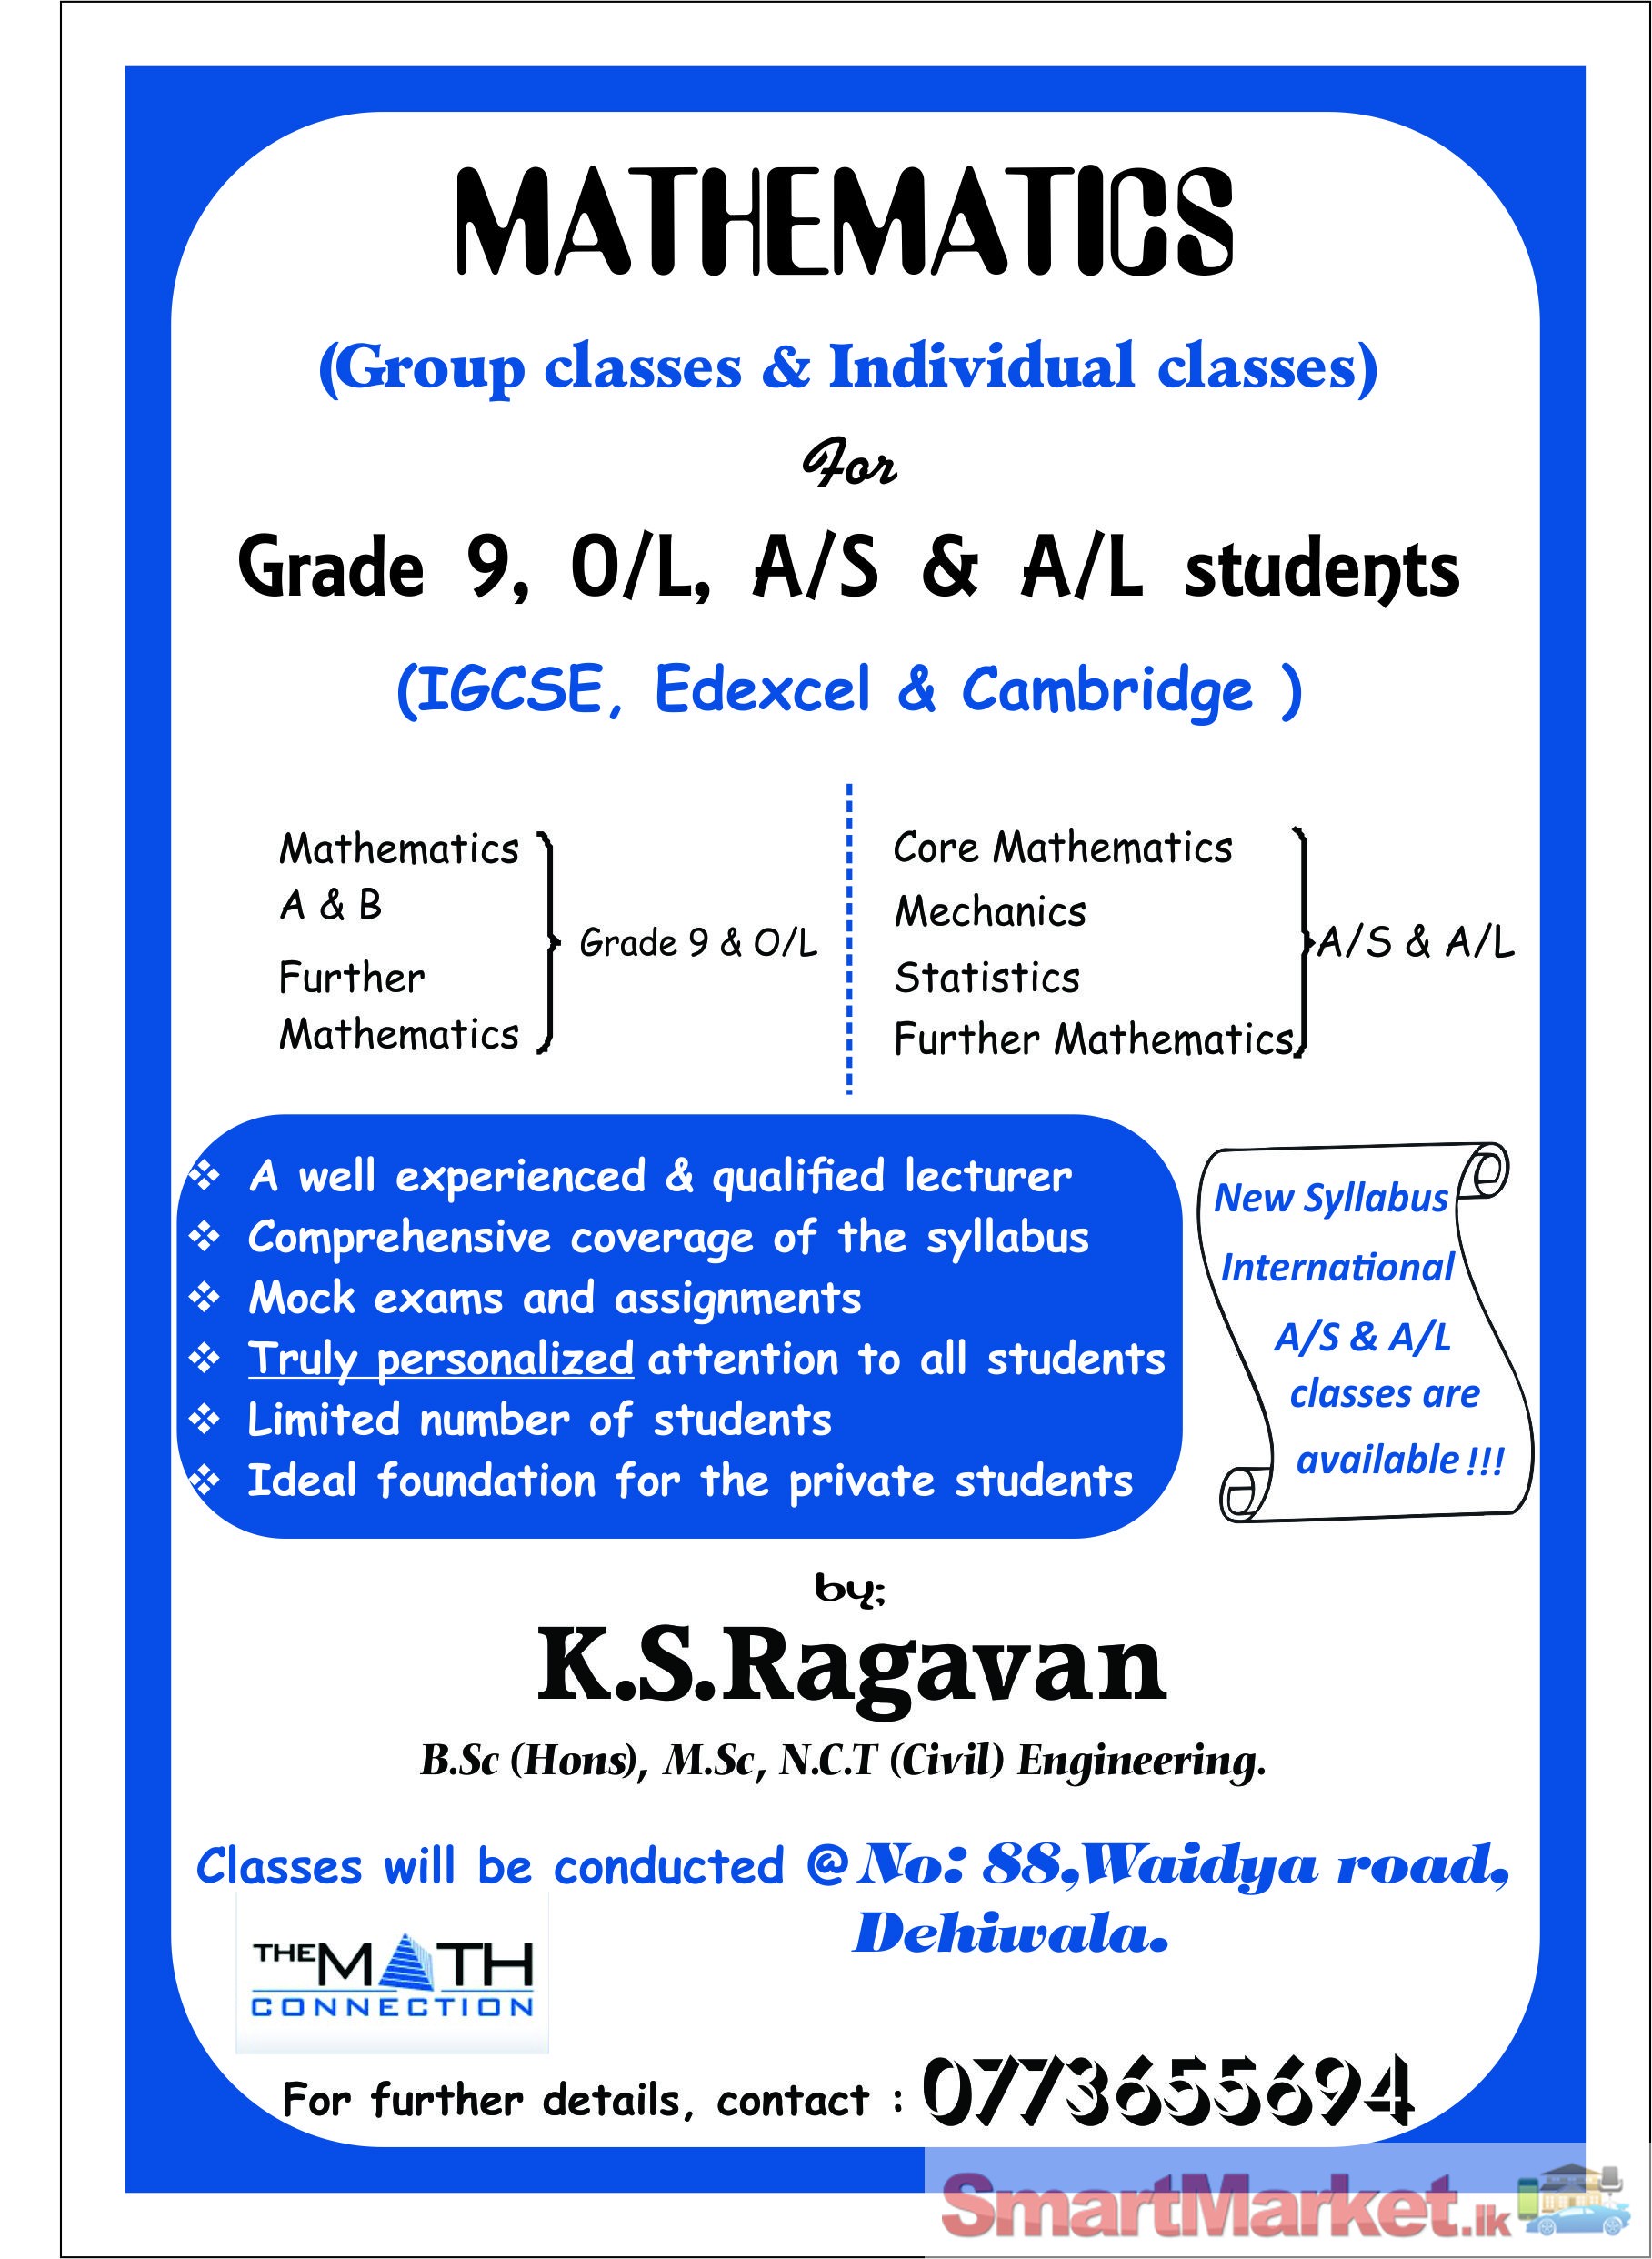 Mathematics Classes for IGCSE,Edexcel and Cambridge syllabus students